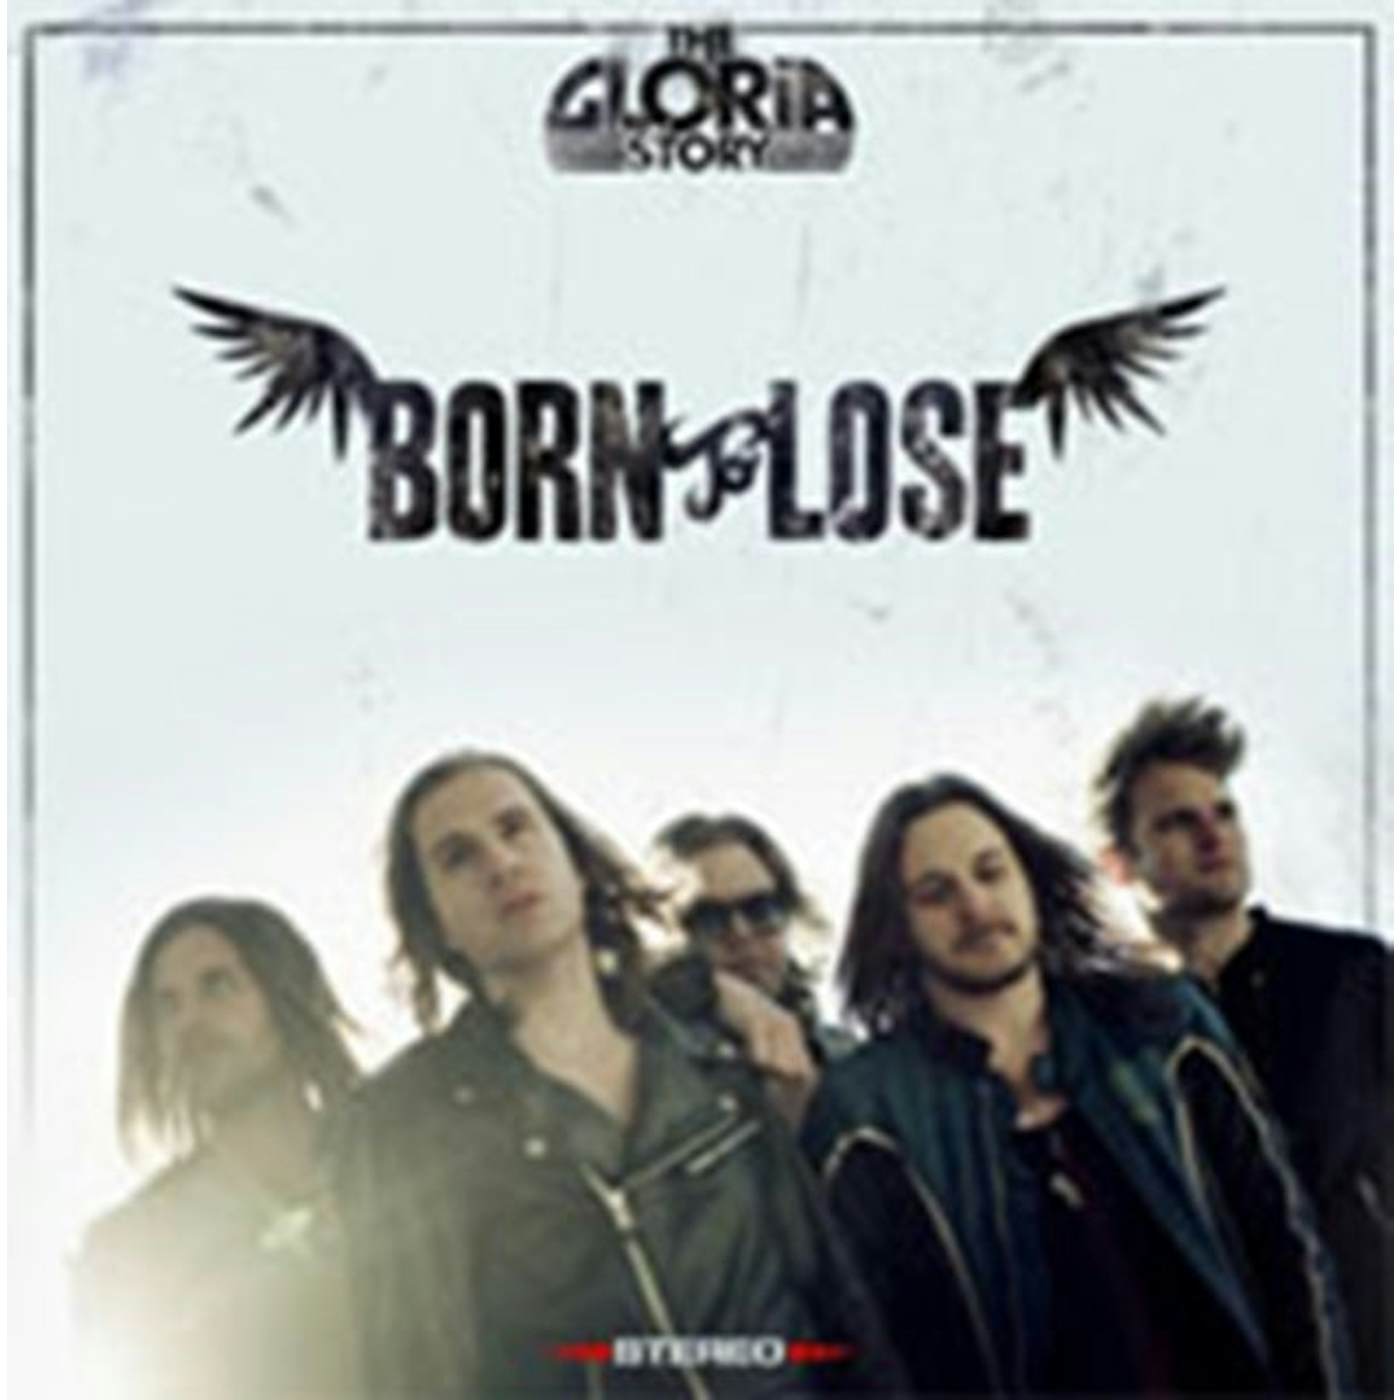 The Gloria Story CD - Born To Lose